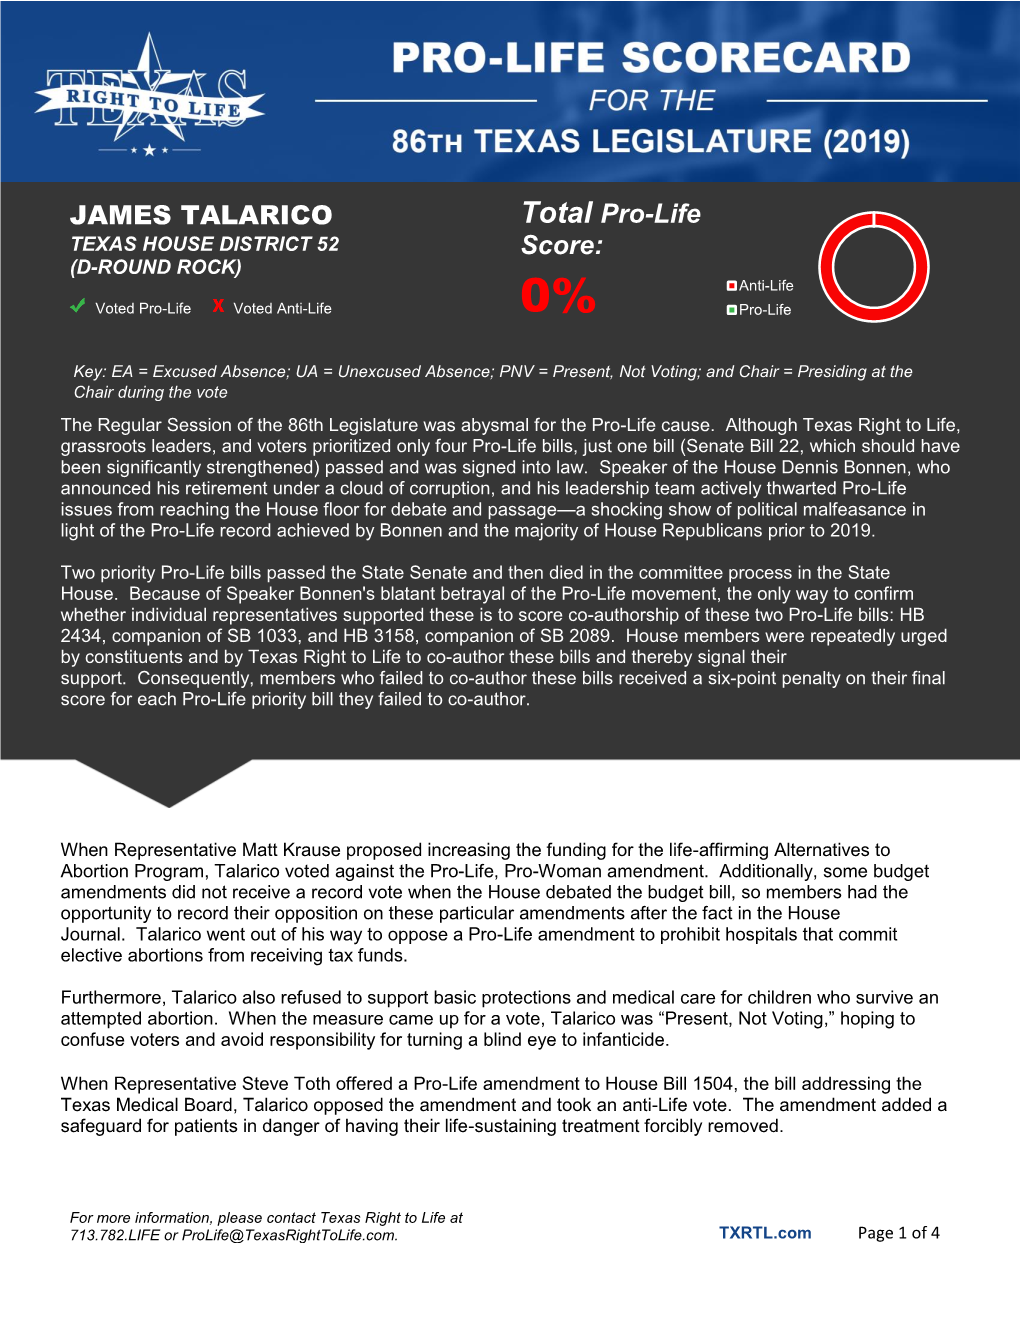 JAMES TALARICO Total Pro-Life Score